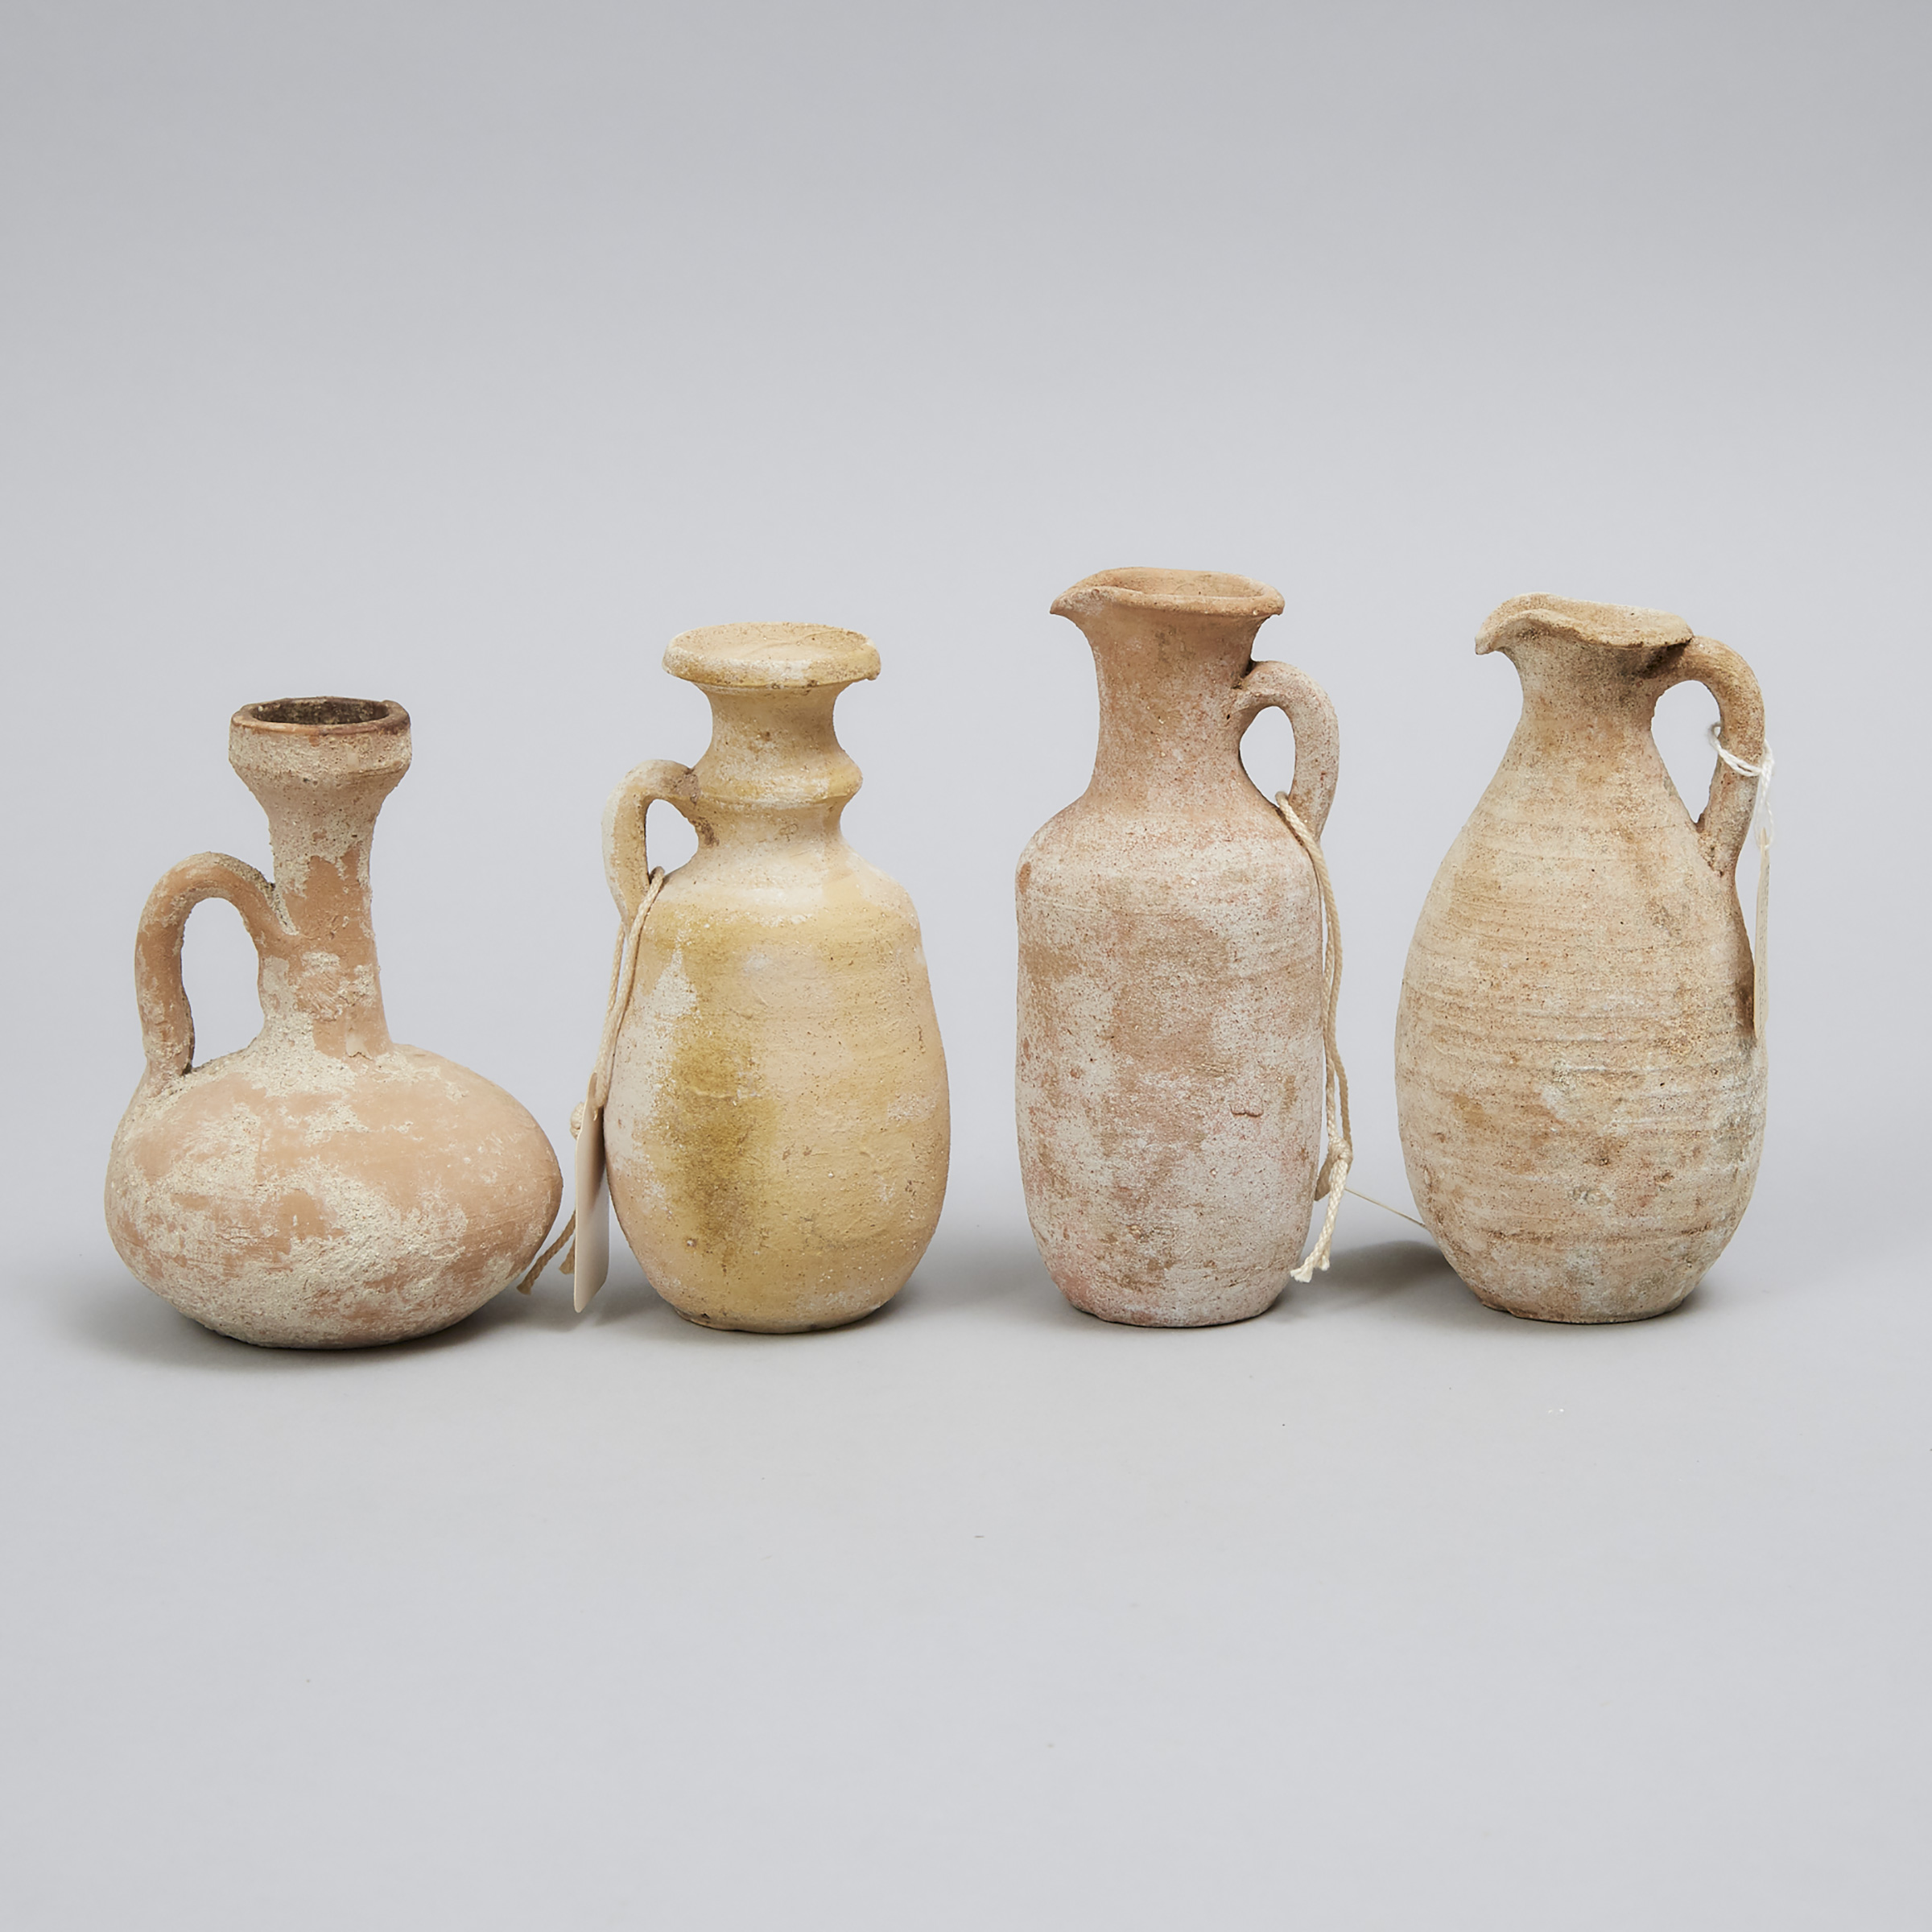 Four Roman Period Levantine-Holy Land Pottery Juglets, 75 B.C.-200 A.D.